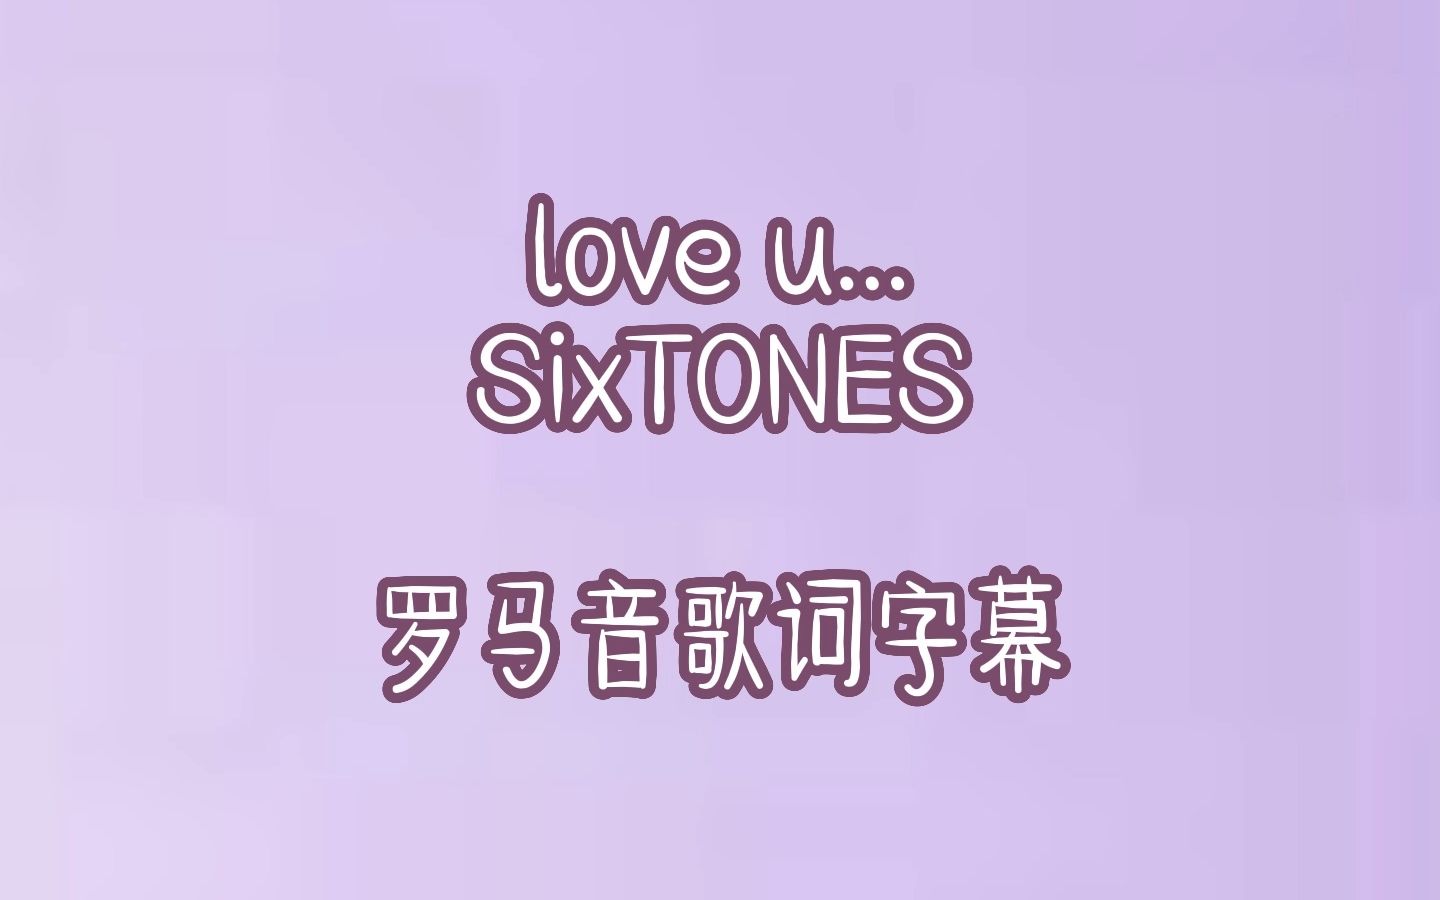 【SixTONES】love u...罗马音歌词字幕(甜死